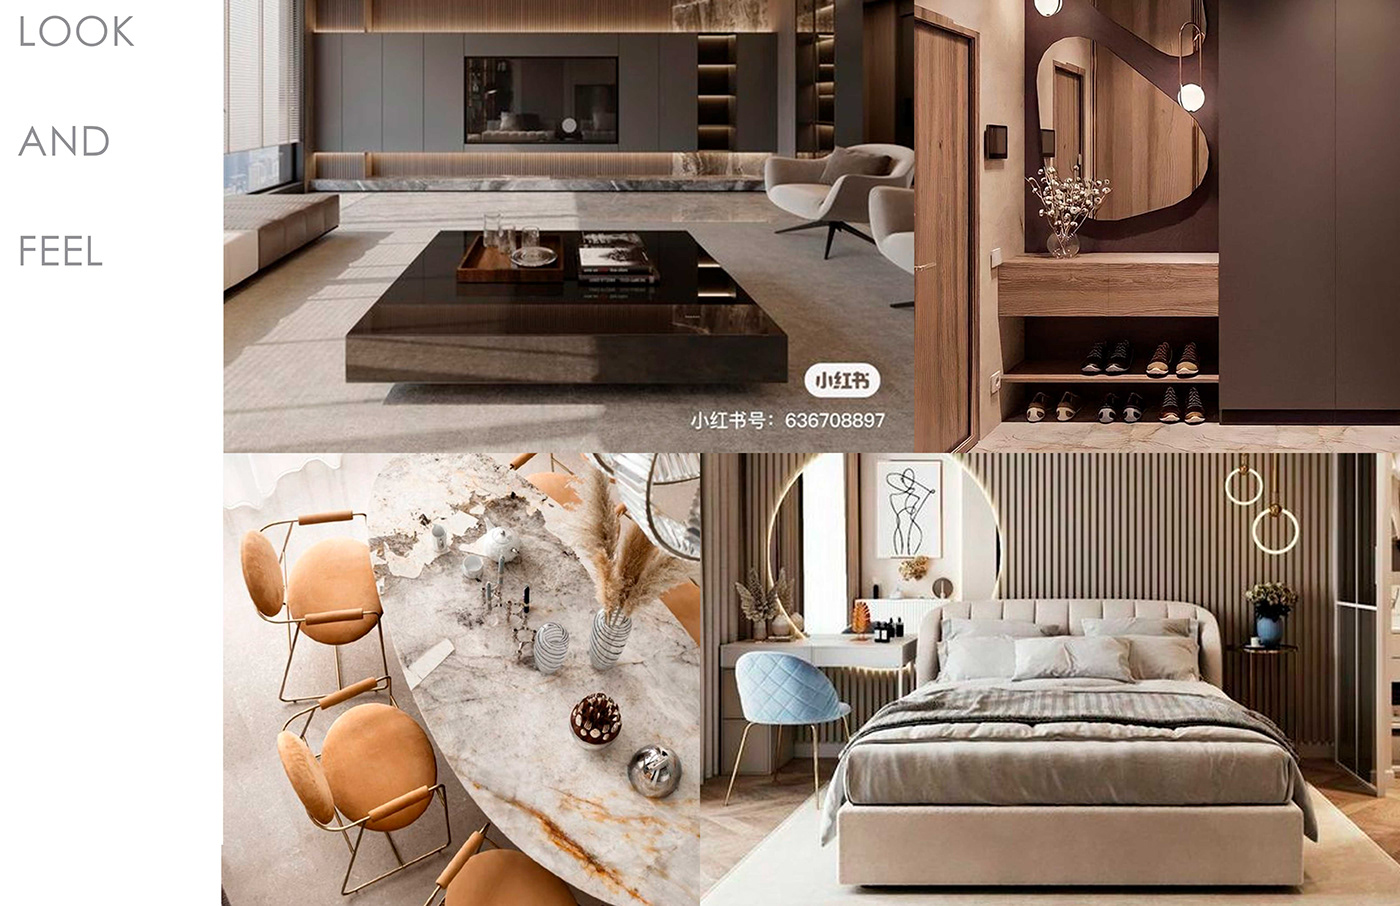 furniture interior design  Render 3ds max vray architecture design stone wood modern